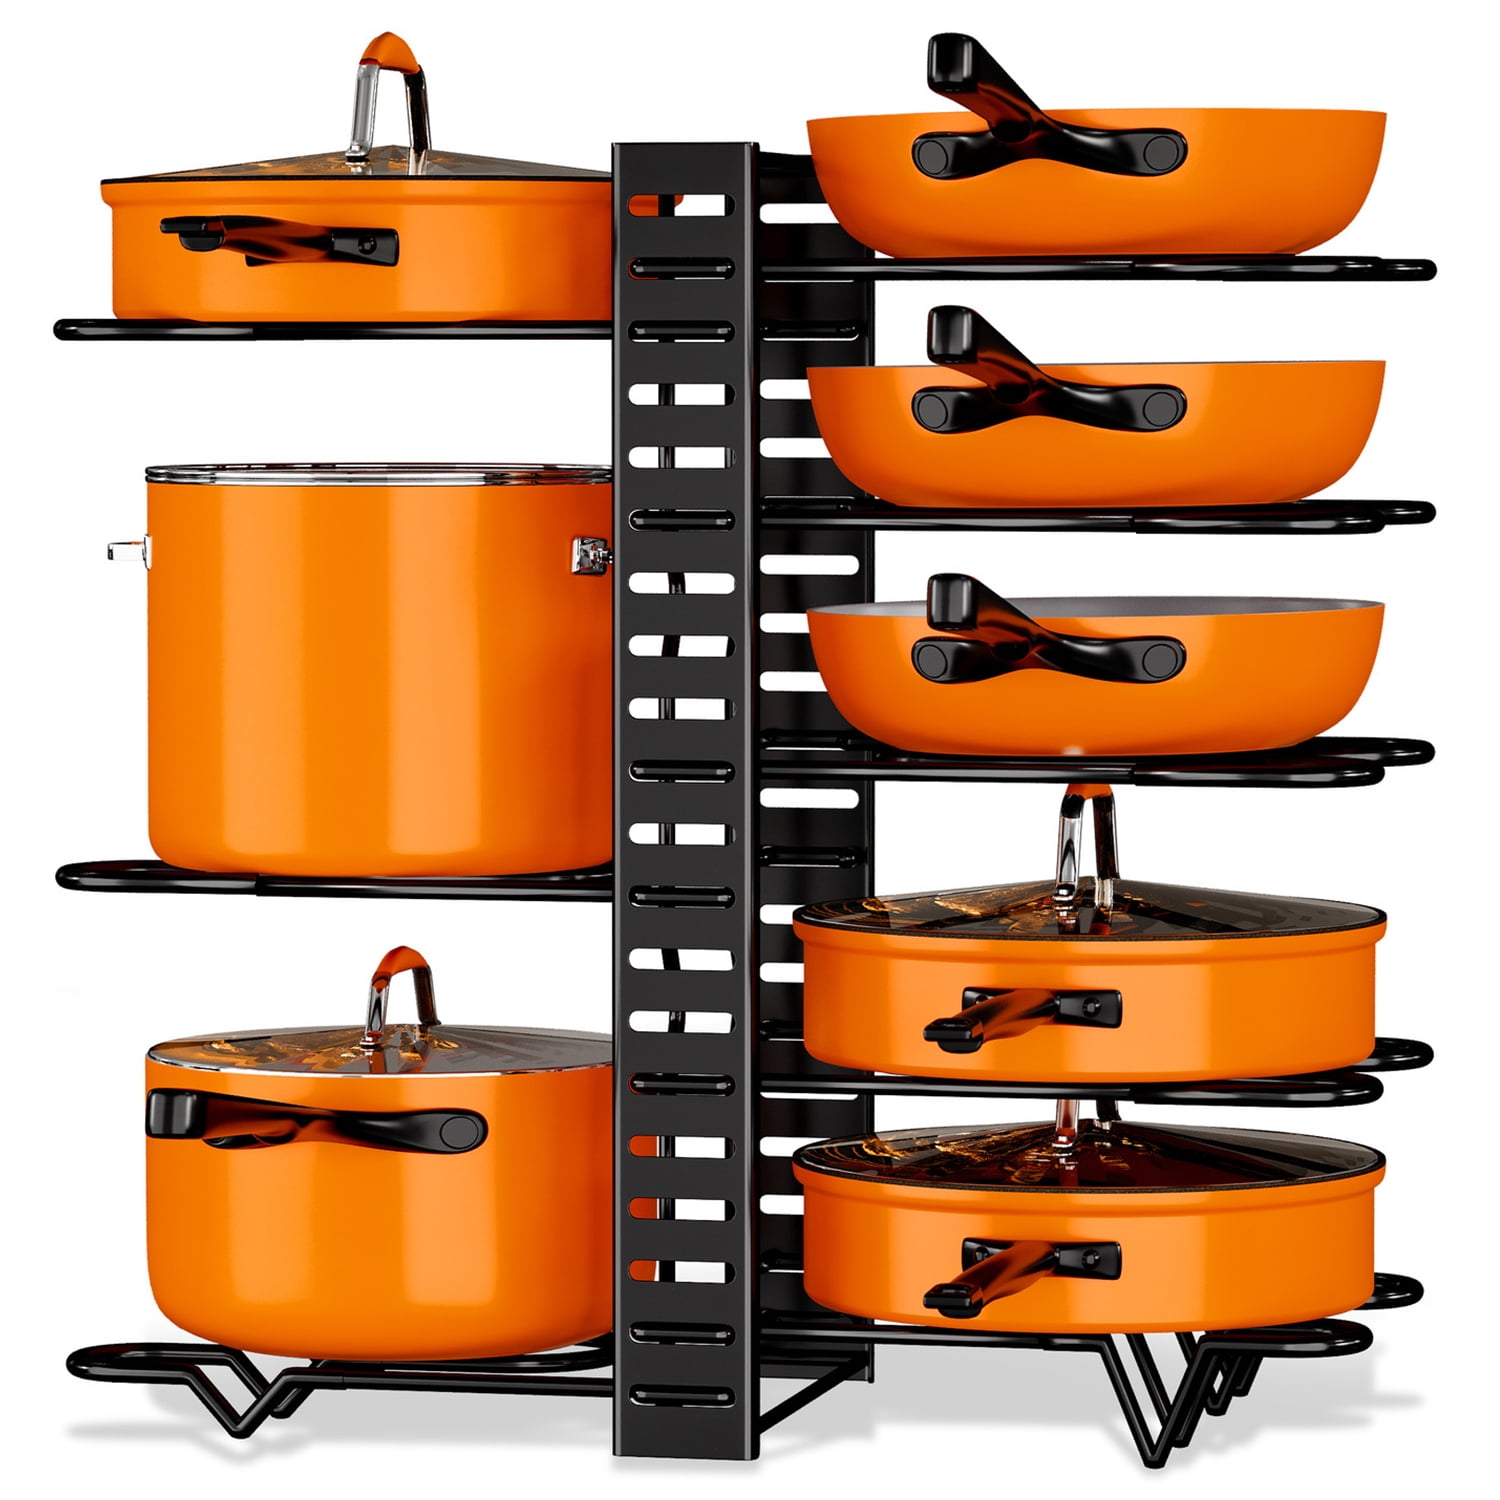 Werseon Pot Rack Organizers 8 Tiers Pots and Pans Organizer Kitchen Cabinet Storage Metal Holders